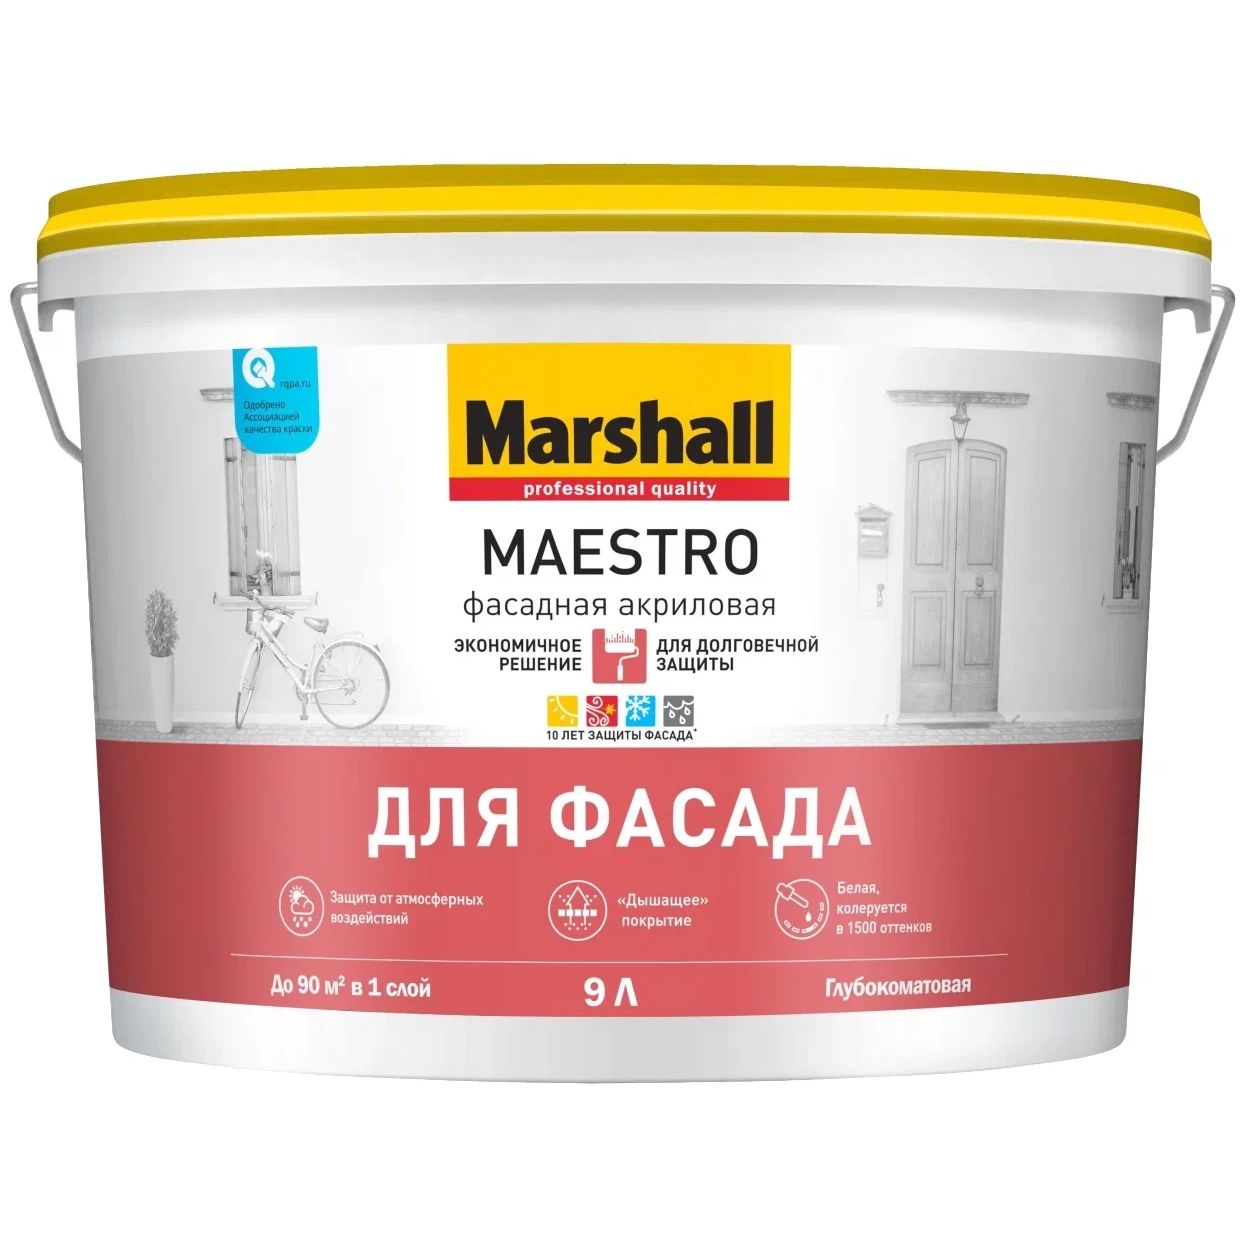 Краска Marshall Maestro фасадная акриловая, глубокоматовая, база BW, 9 л краска marshall maestro фасадная акриловая глубокоматовая bc 2 5 л